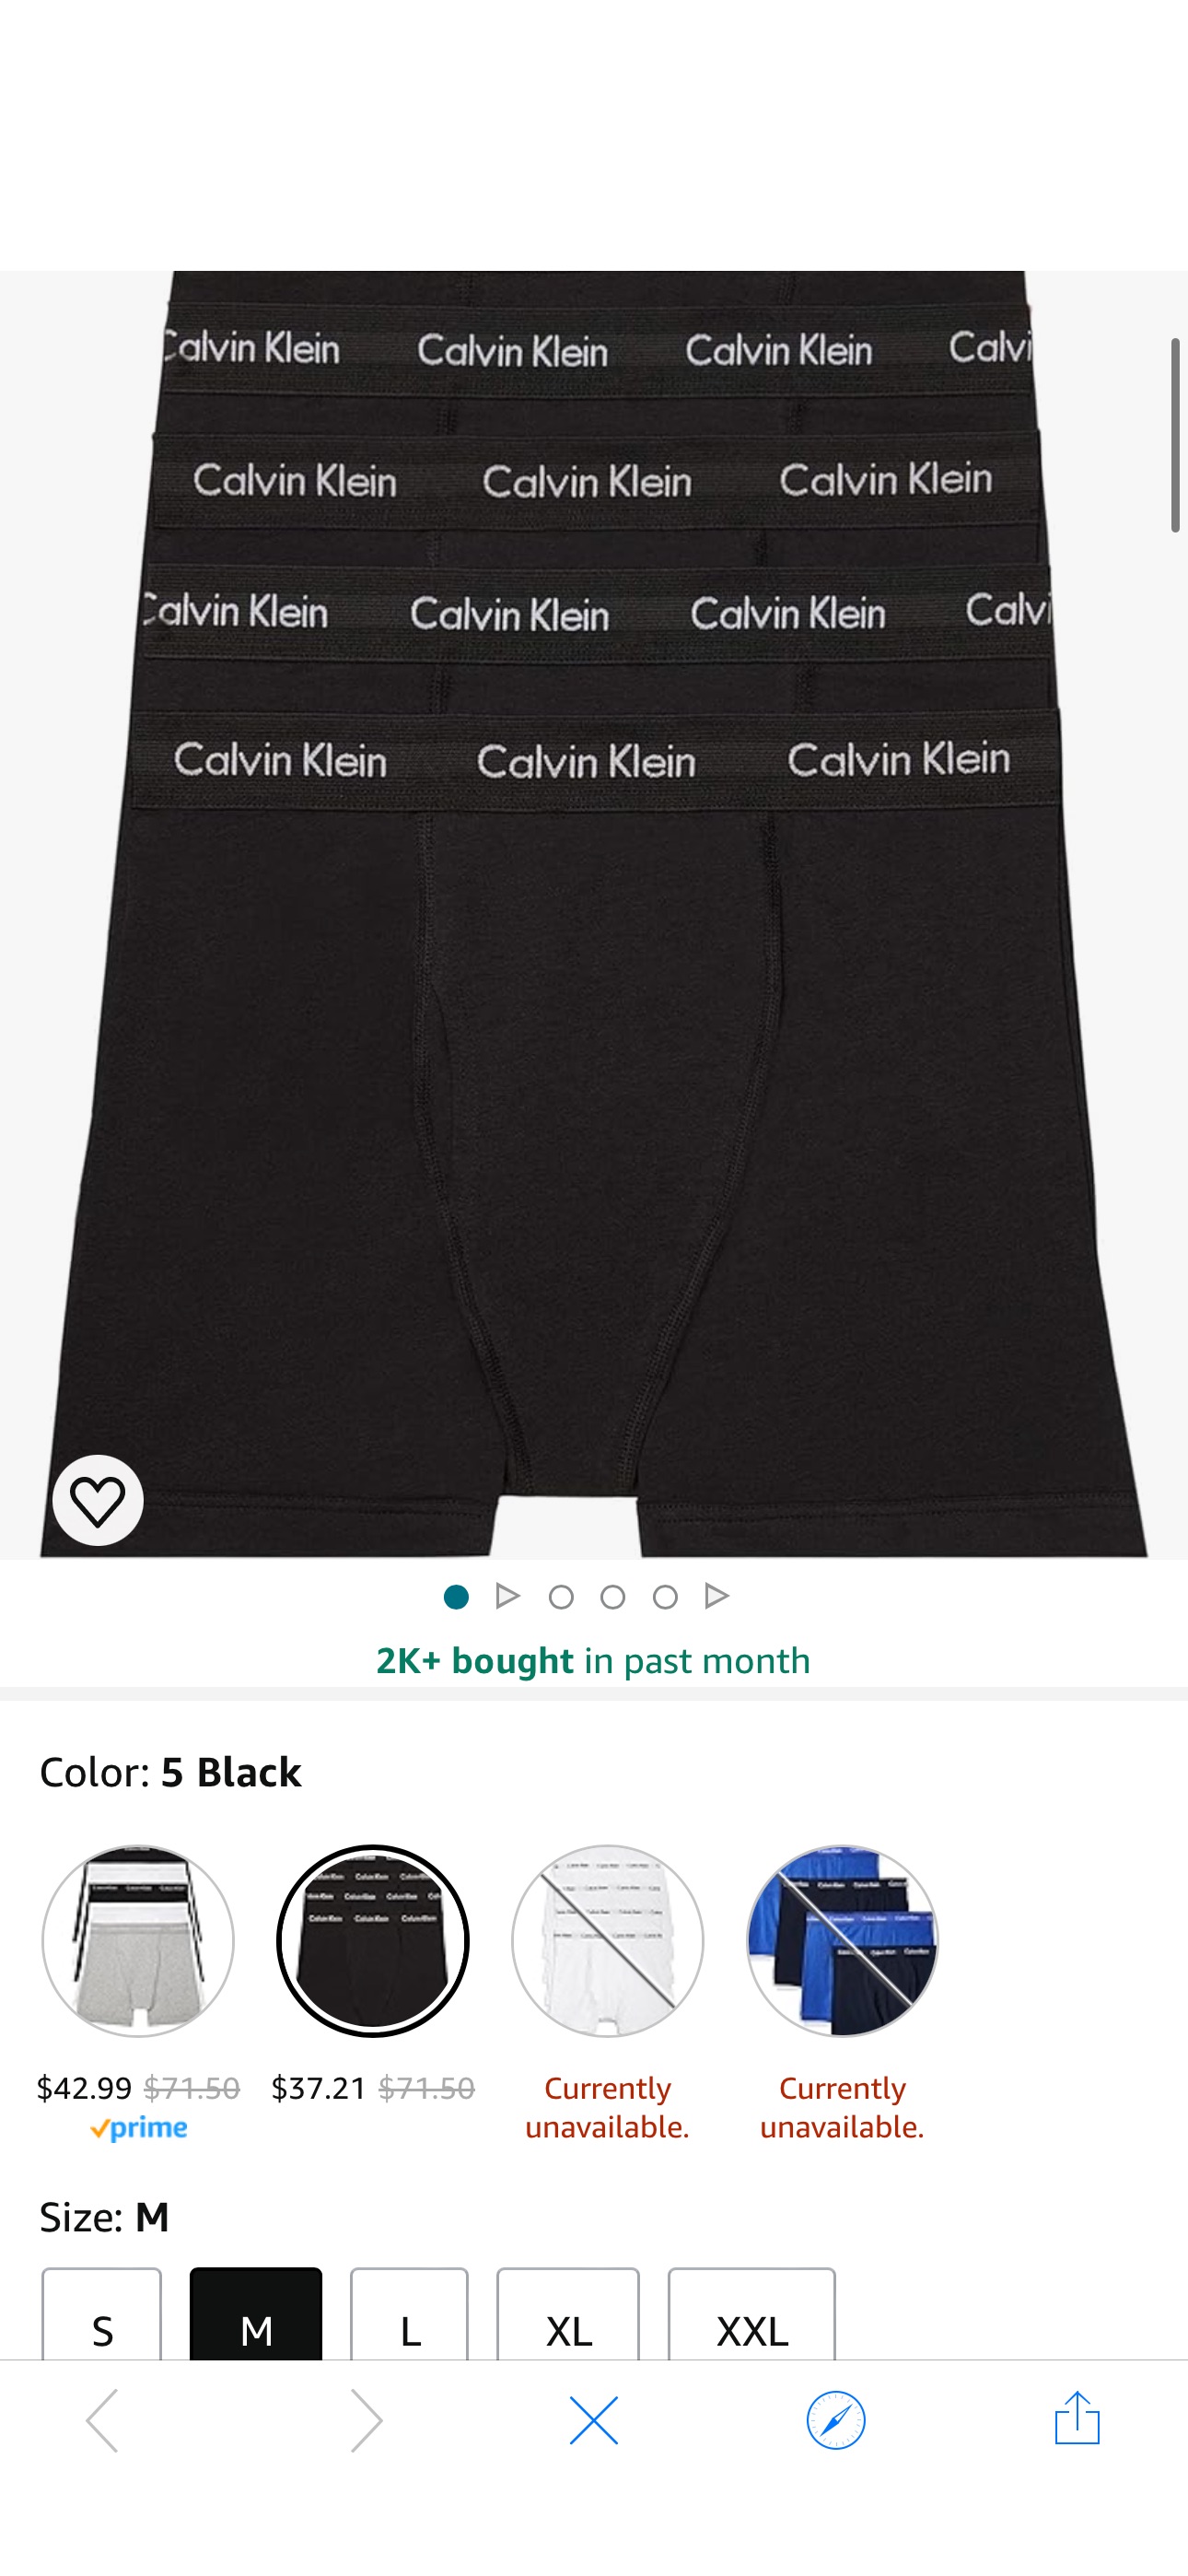 Calvin Klein Men's Cotton Stretch 5-Pack Boxer Brief, 5 Black, M at Amazon Men’s Clothing store